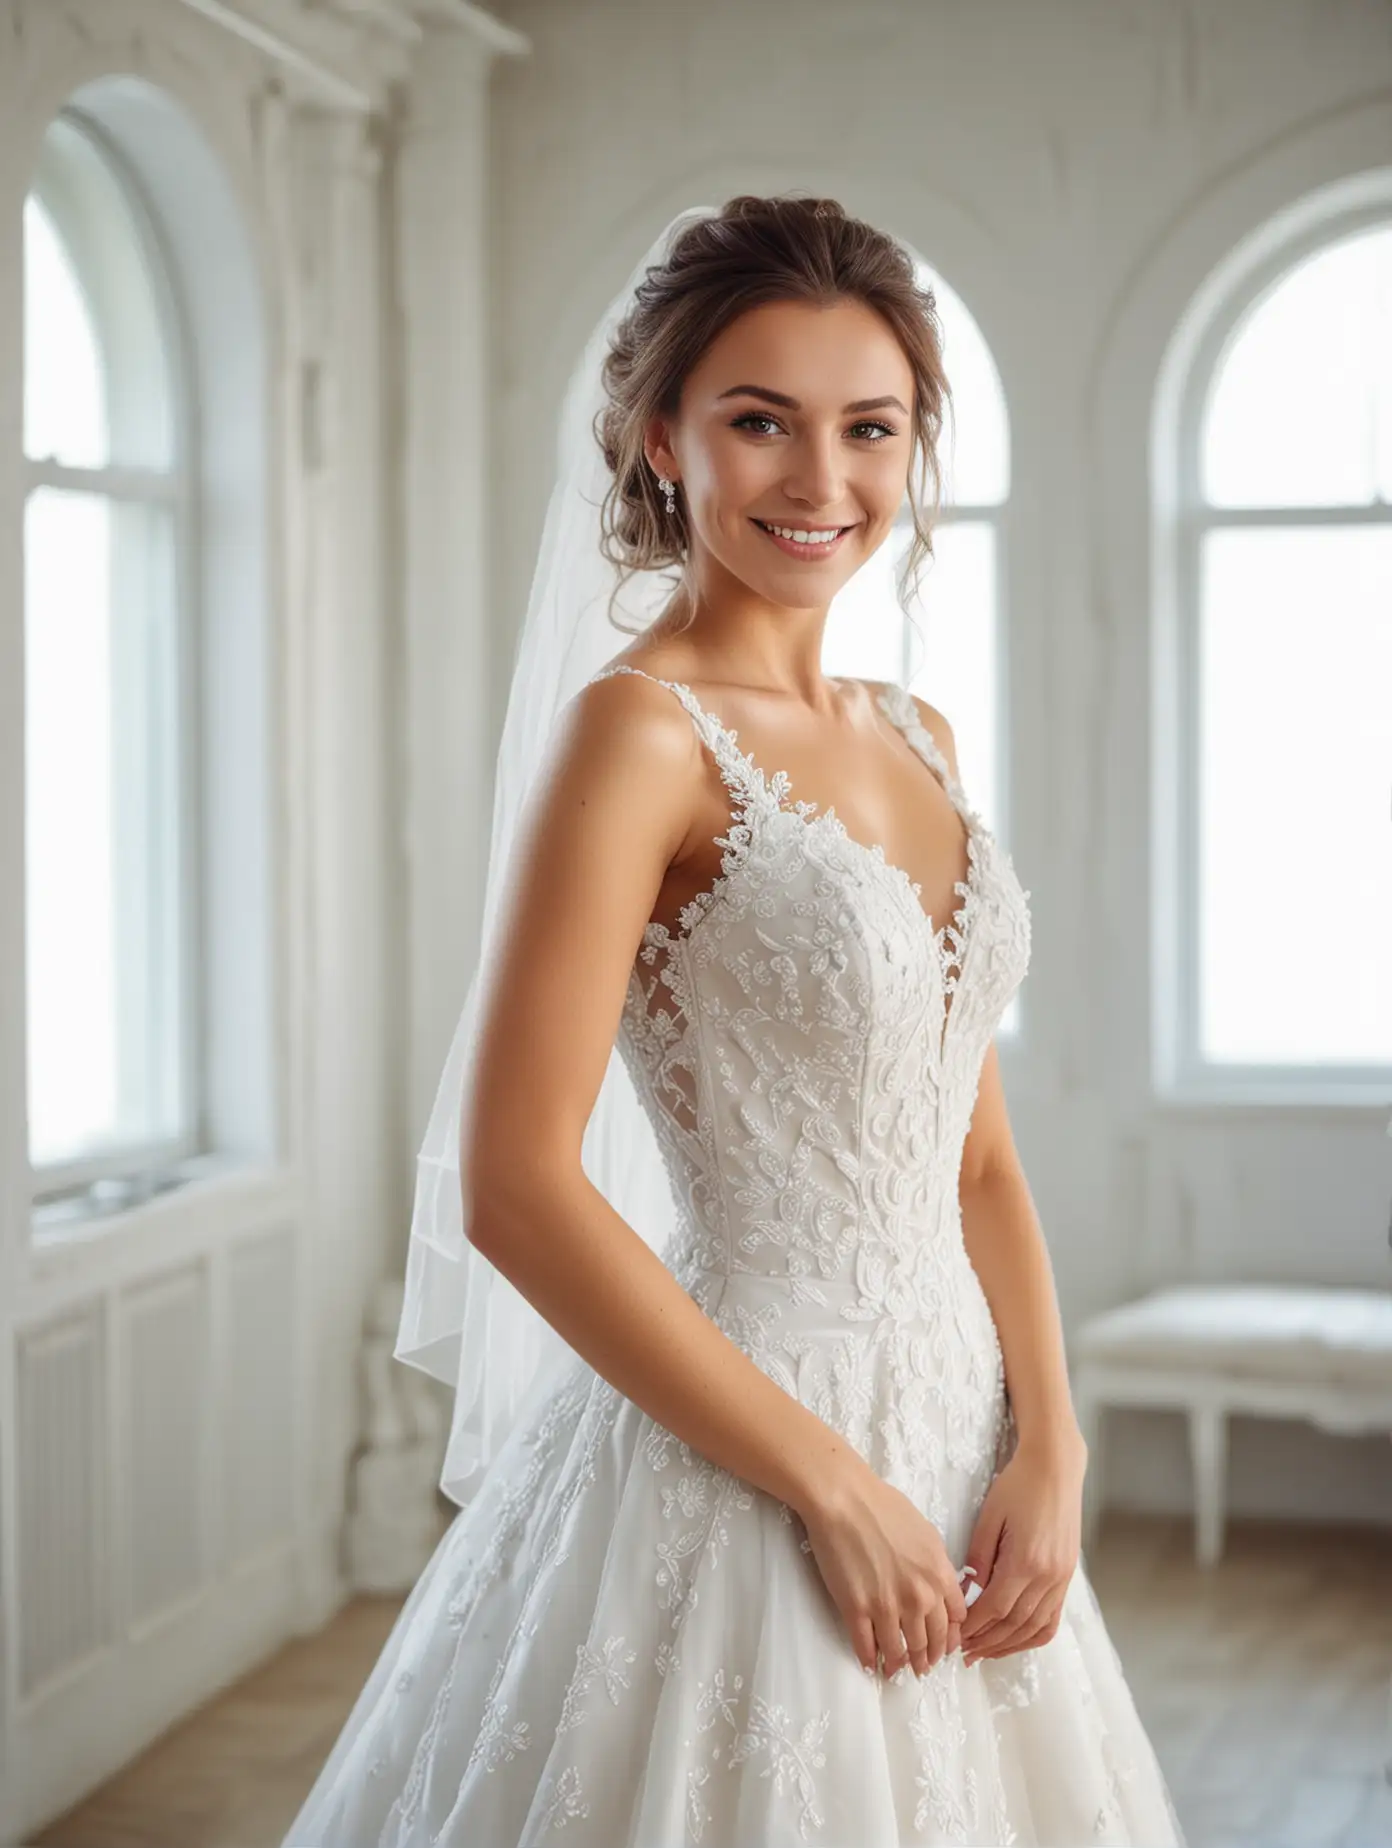 Joyful Young Bride in White Wedding Dress Posing in Bright Interior